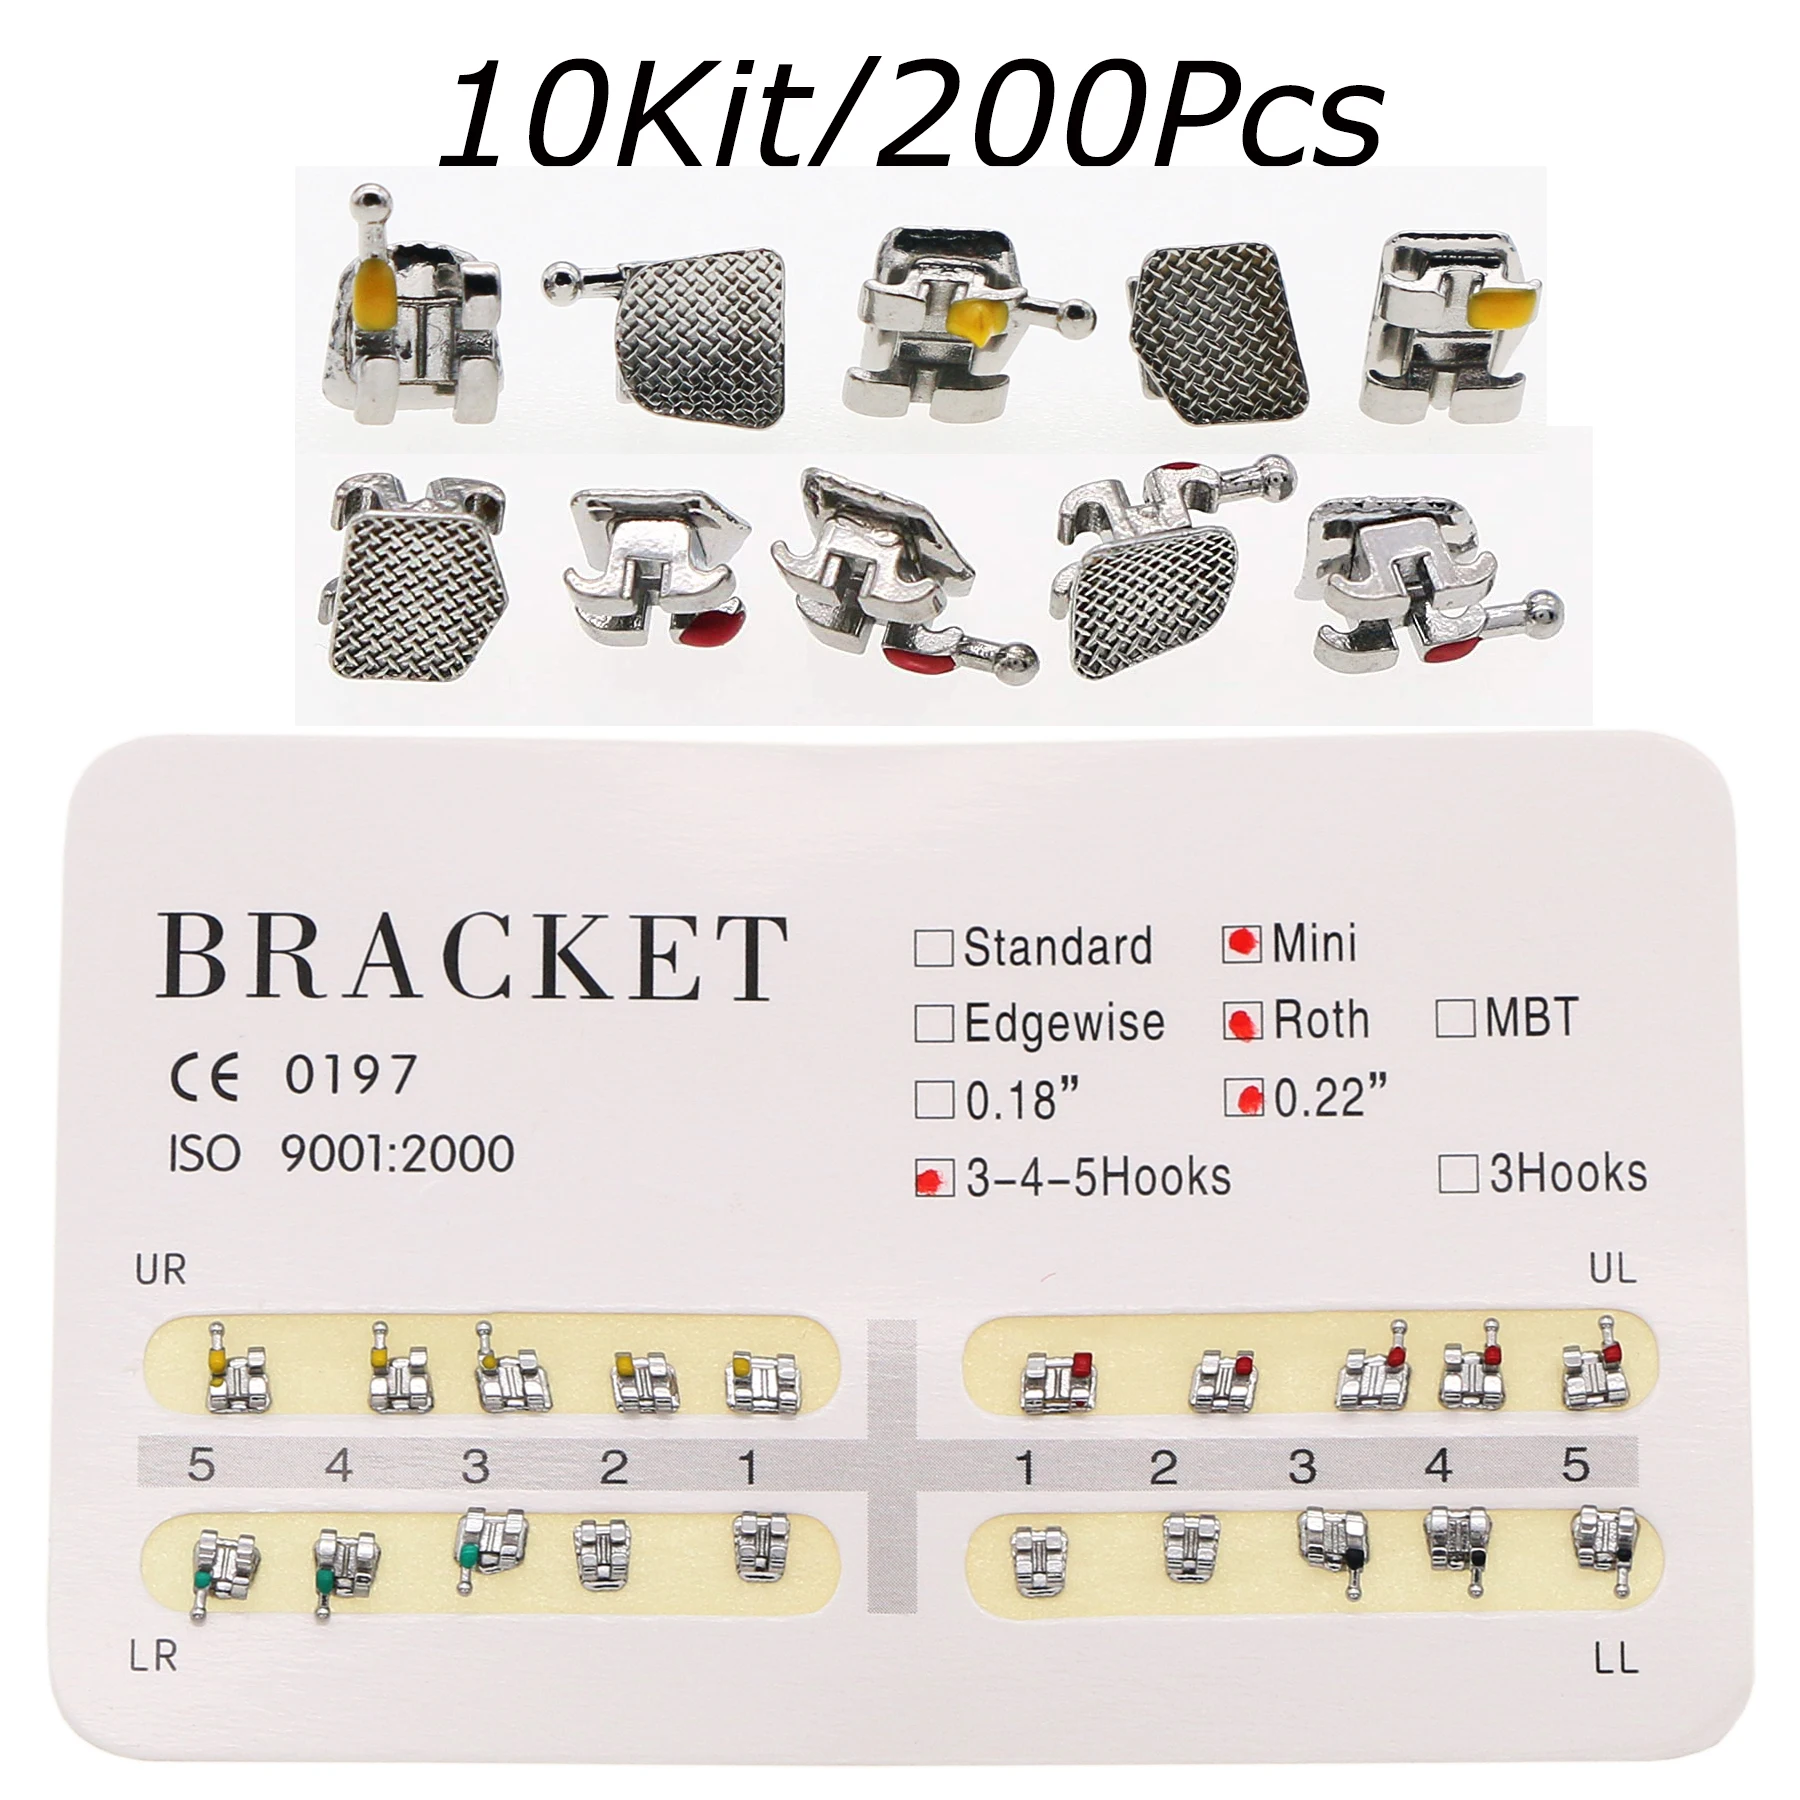 10 Sets/200pcs High Quality Dental Orthodontic Metal Brackets Braces Mini ROTH 022